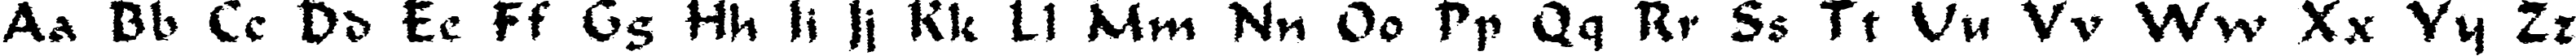 Пример написания английского алфавита шрифтом Old Oak